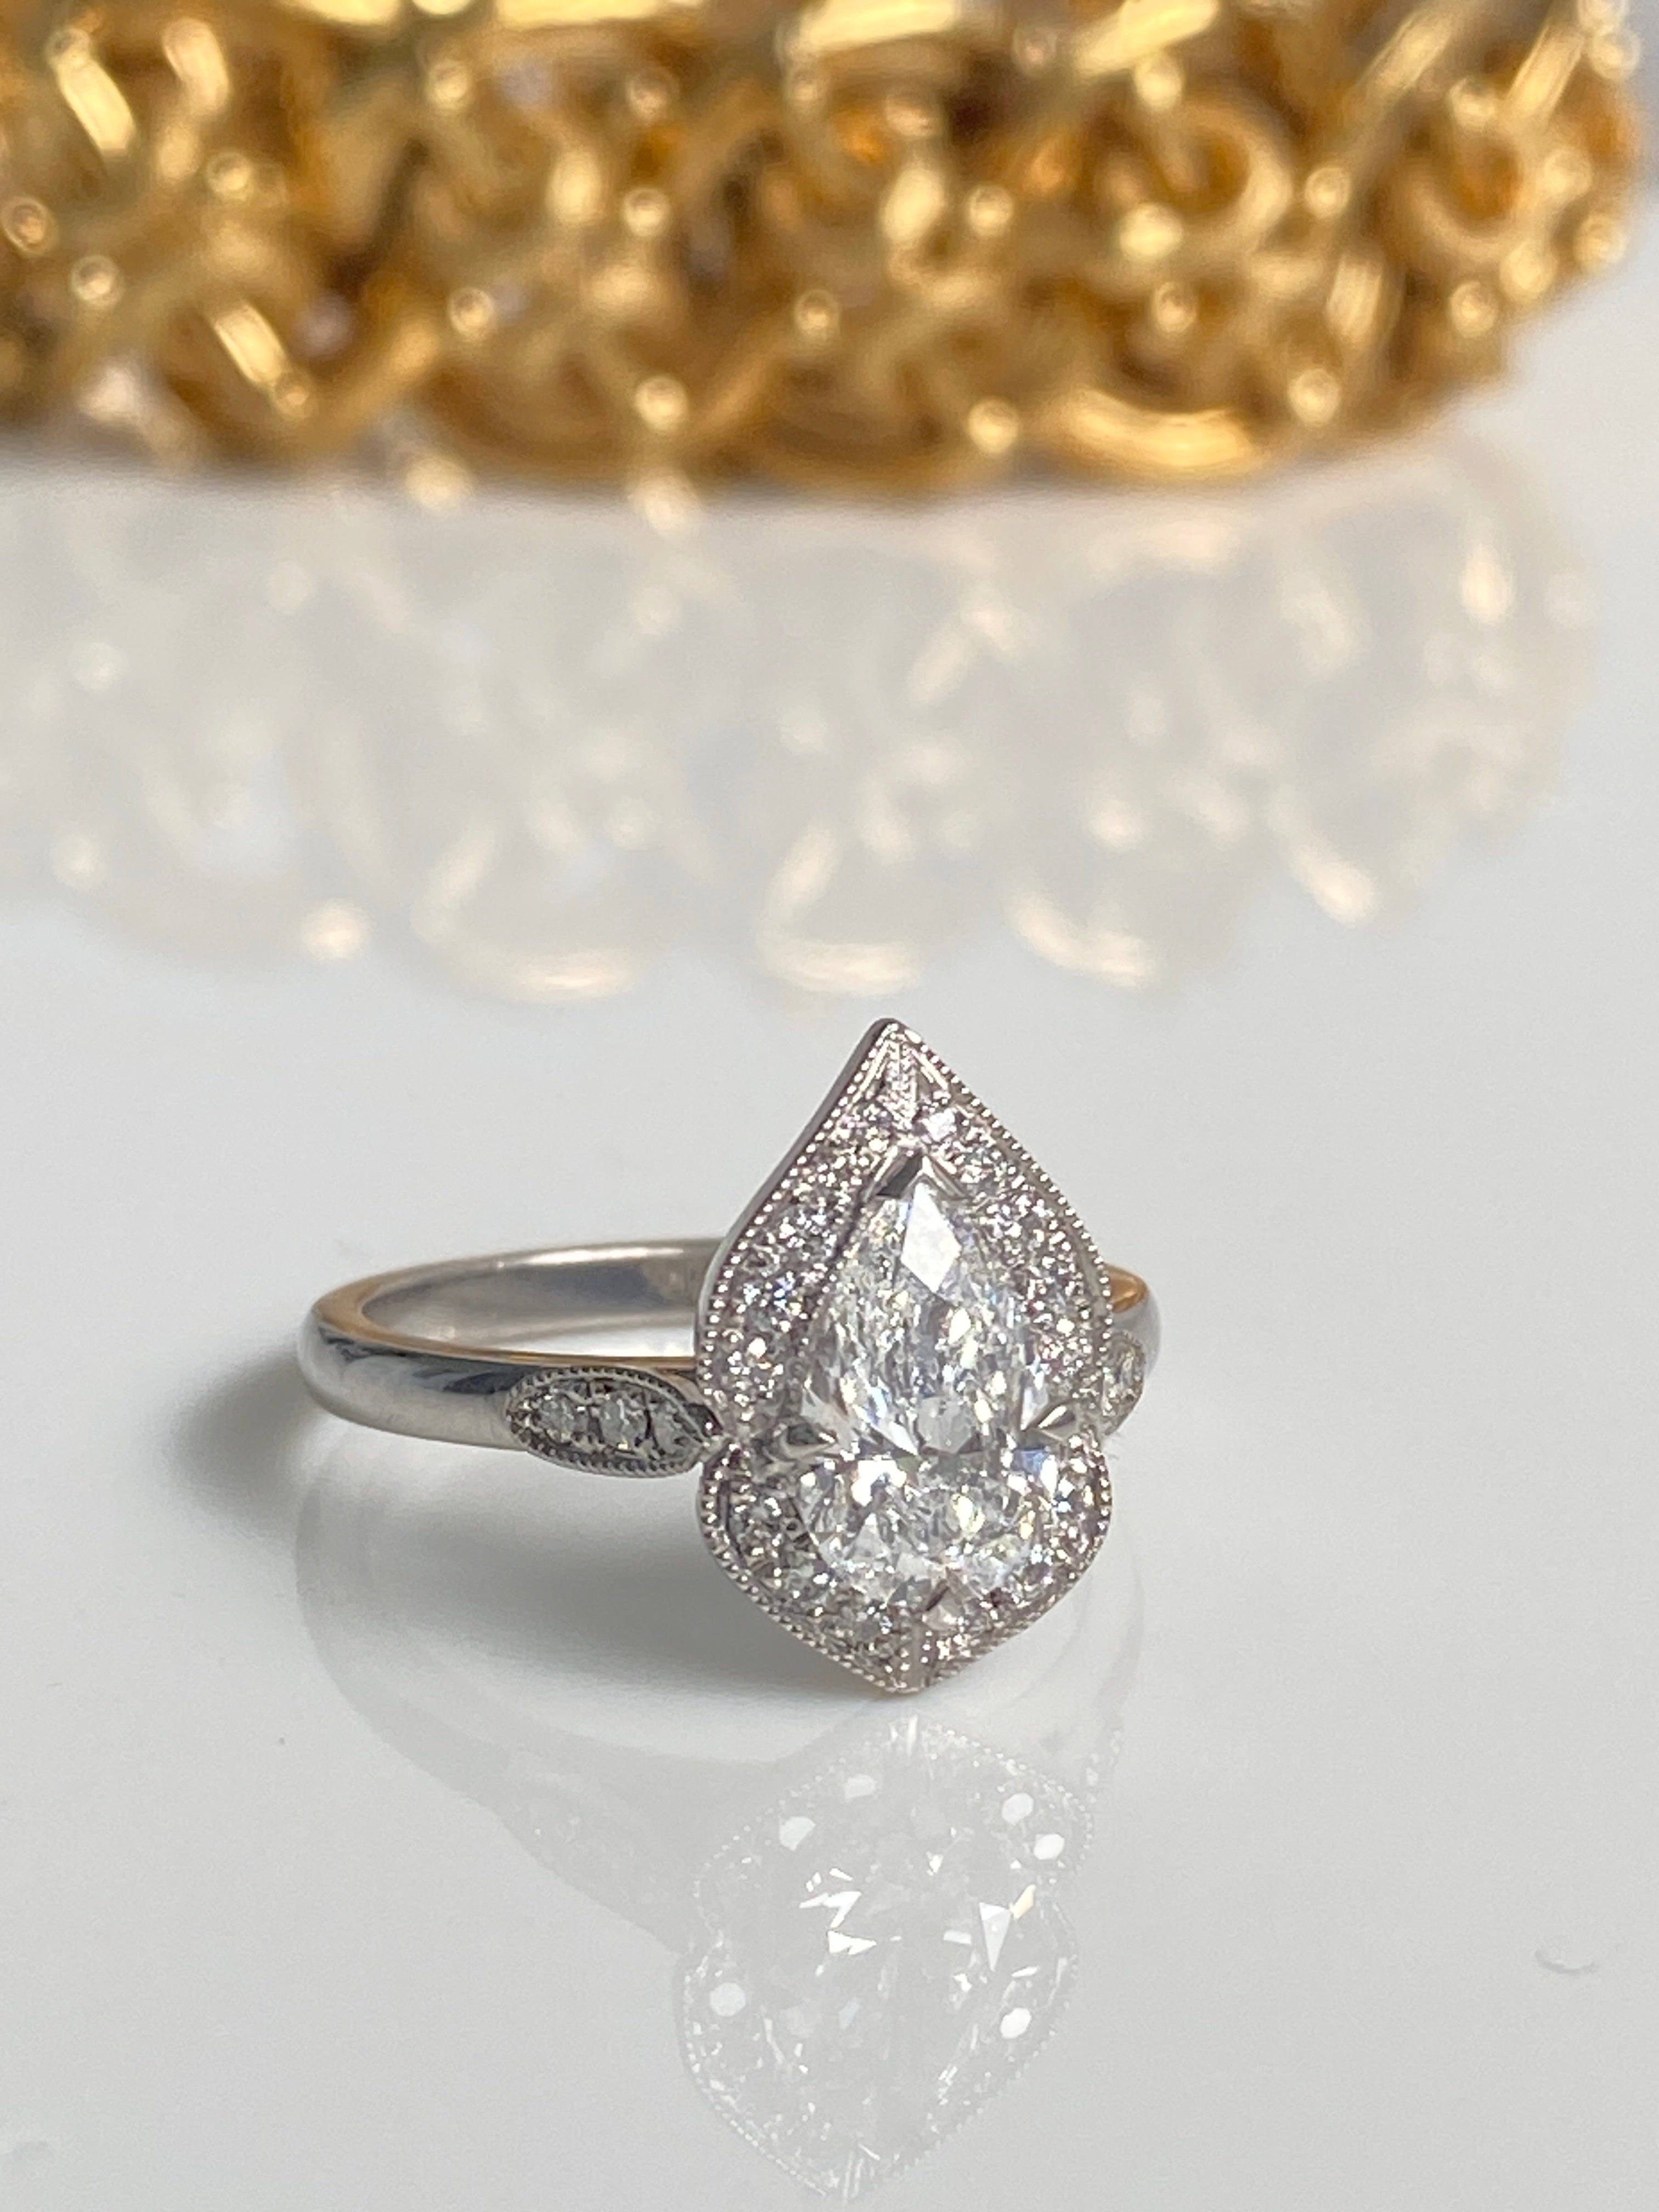 Striking Solitaire Diamond Ring